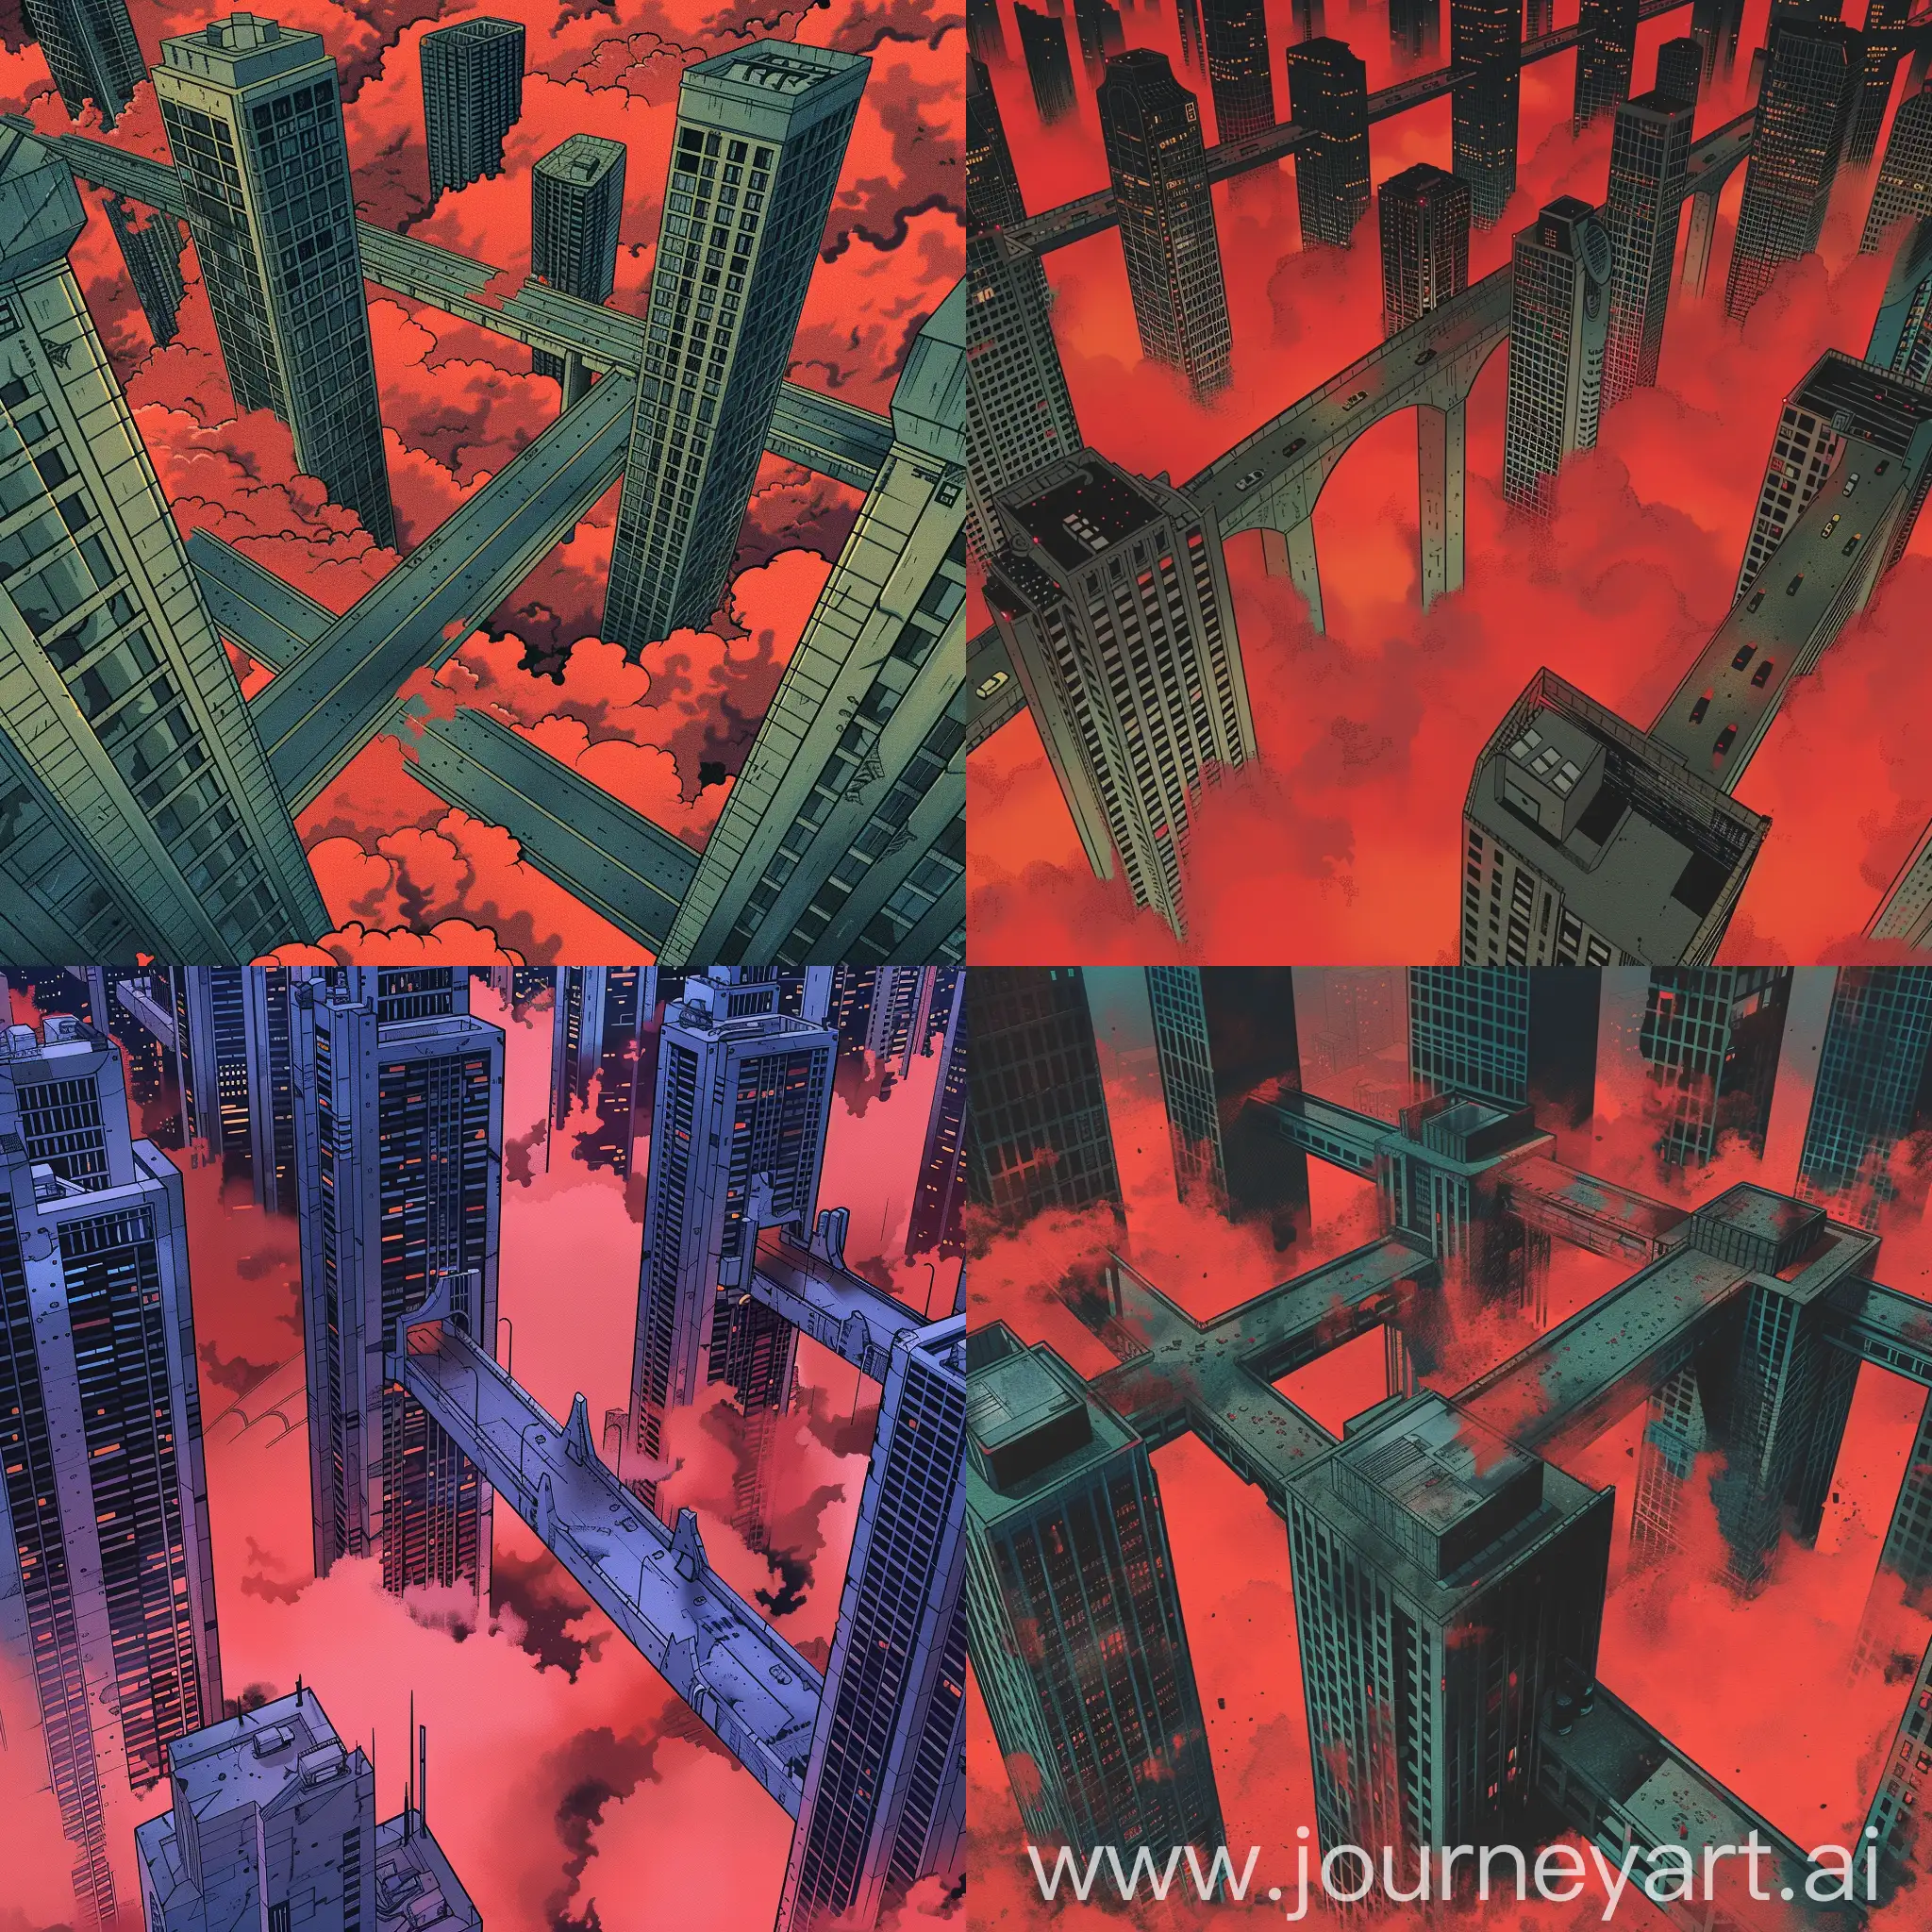 Urban-Landscape-with-Concrete-Bridges-and-Red-Fog